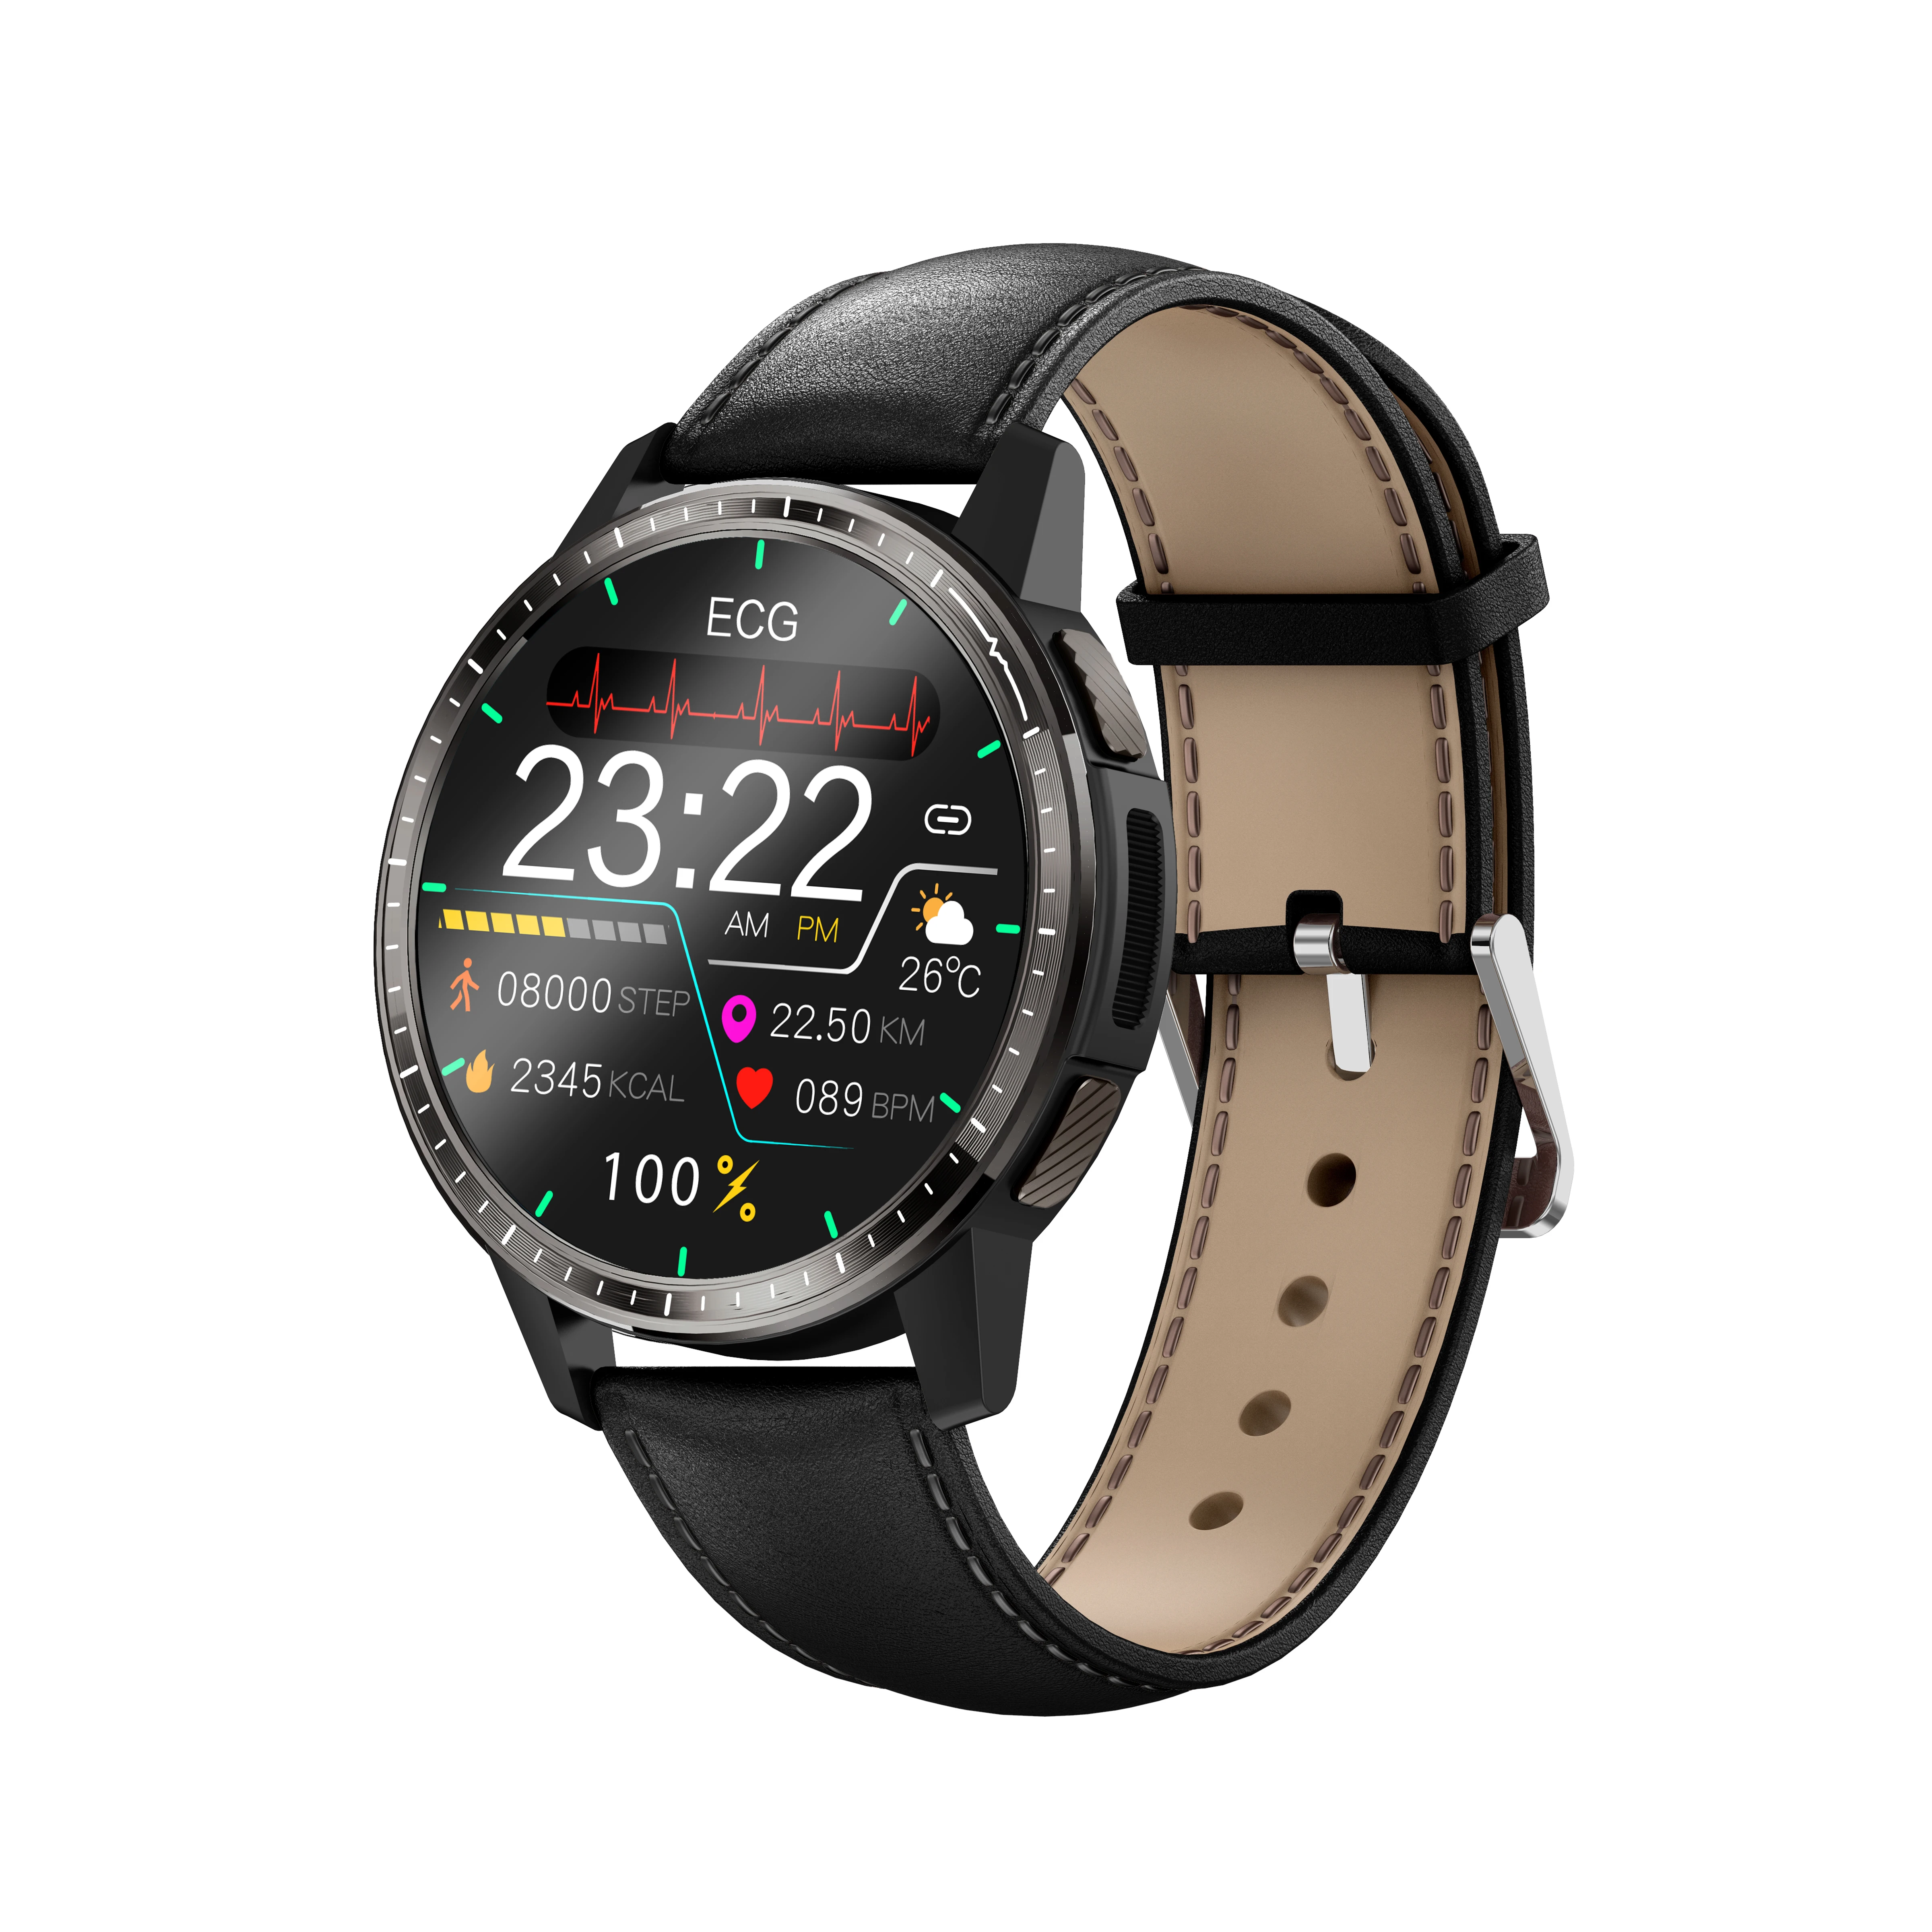 

2021 Sport Smart Watch PPG ECG Heart Rate Blood Pressure Blood Oxengen Temperature Wristwatch Amazon Hot Selling H9 Smartwatch, Black brown